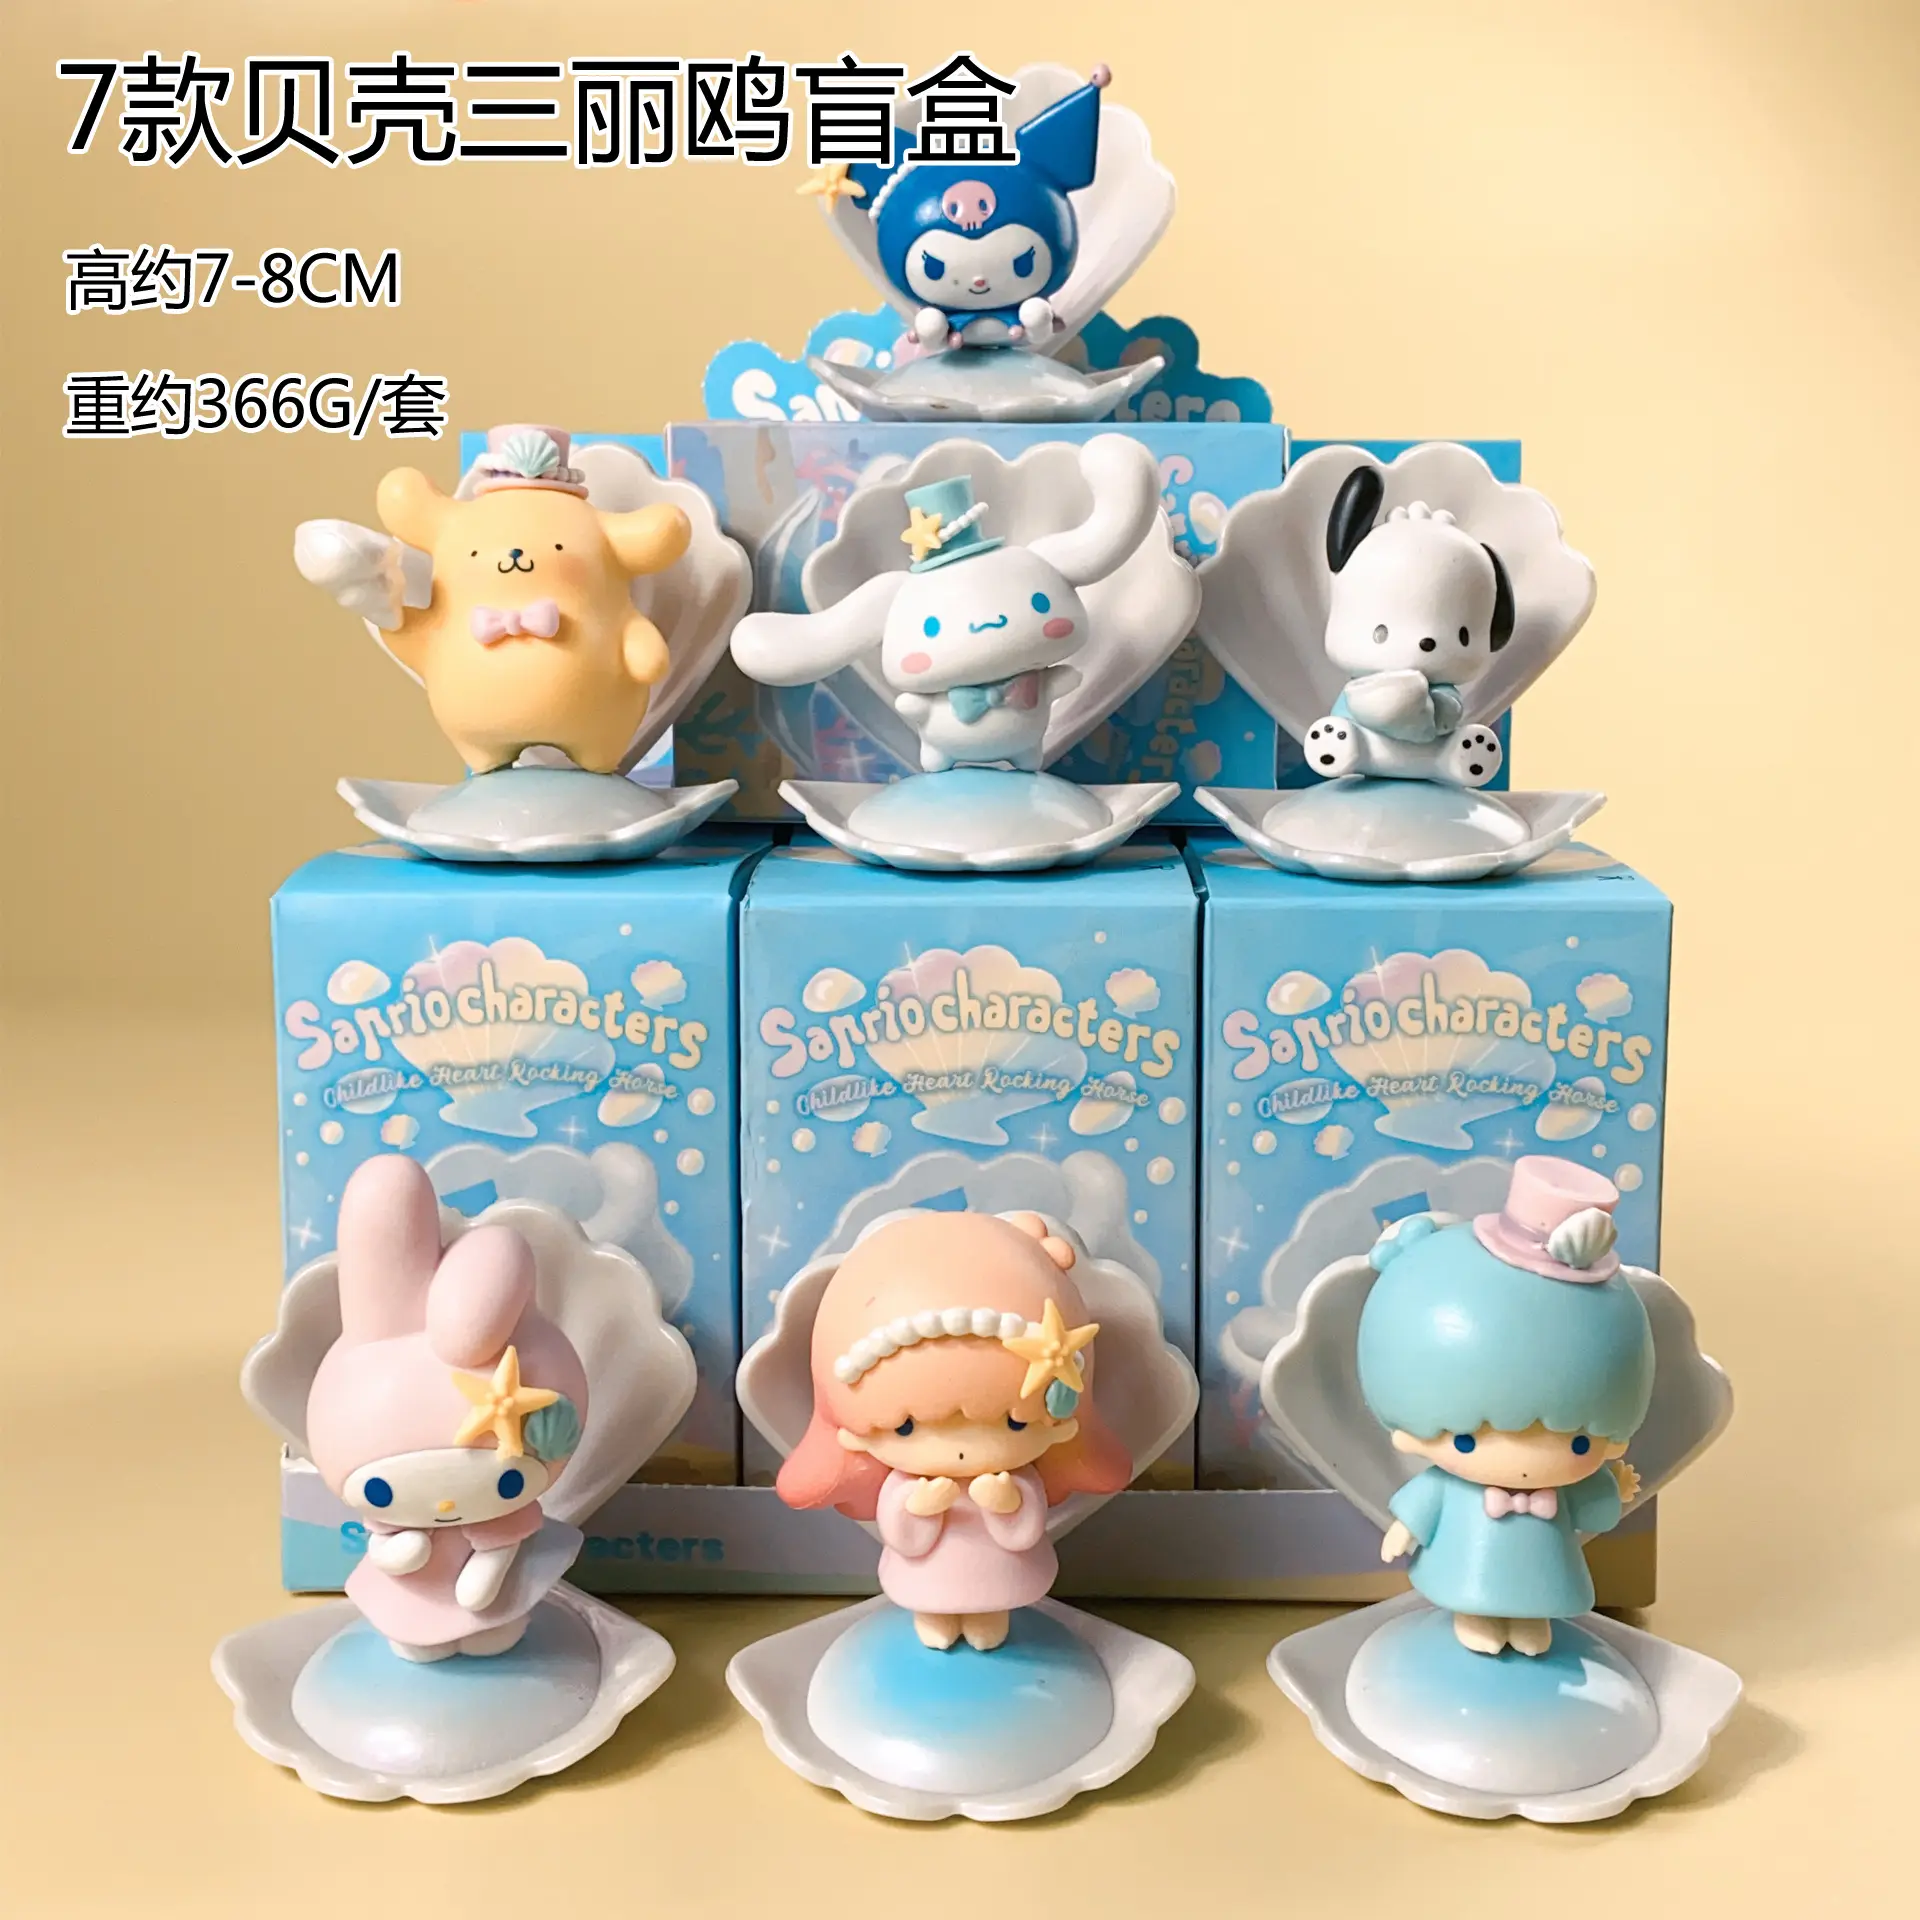 BD Cartoon Anime Blind Box Kulomi Gachapon Machine Doll Pokemoned Constellation Figure Toys PVC Ornament